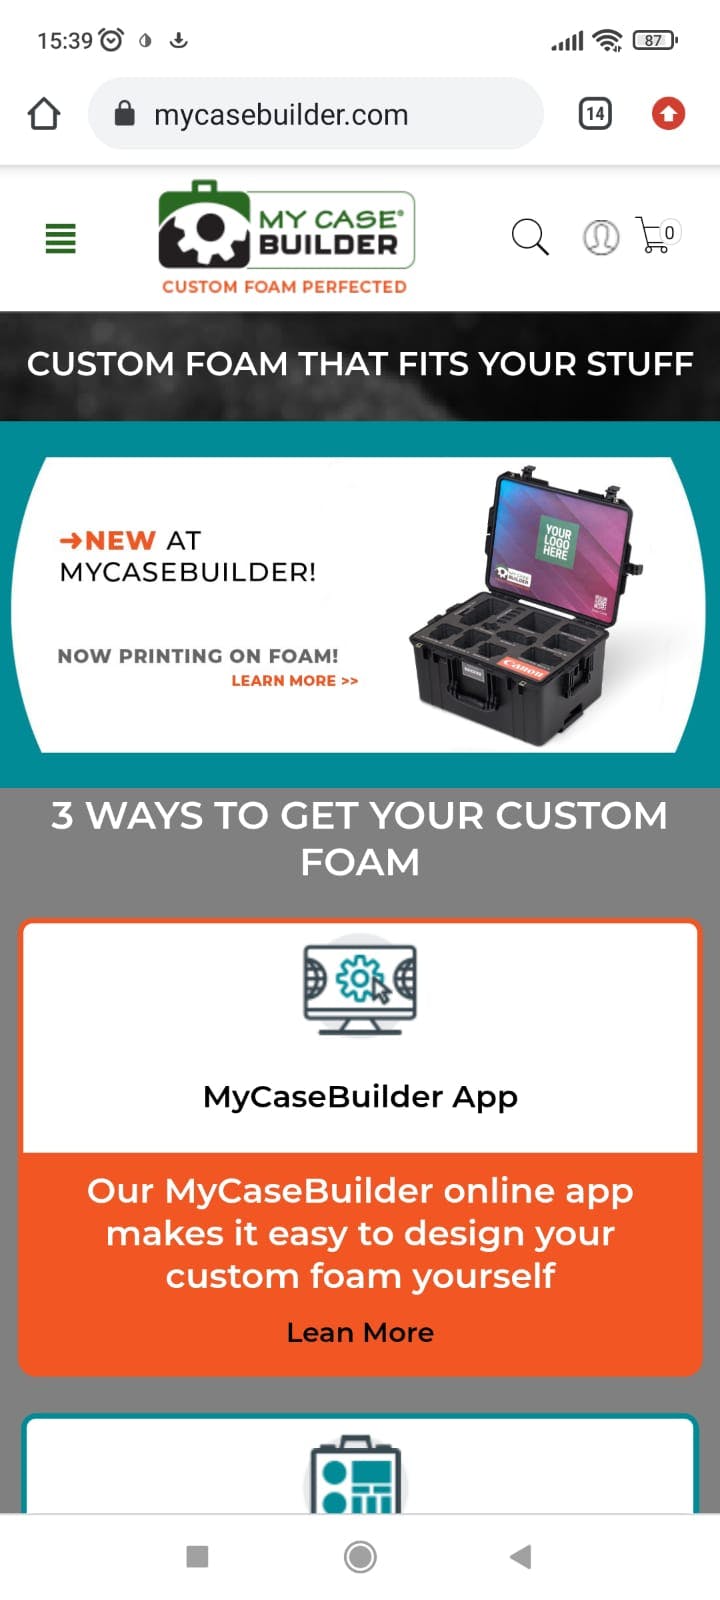 MyCaseBuilder homepage on smartphones